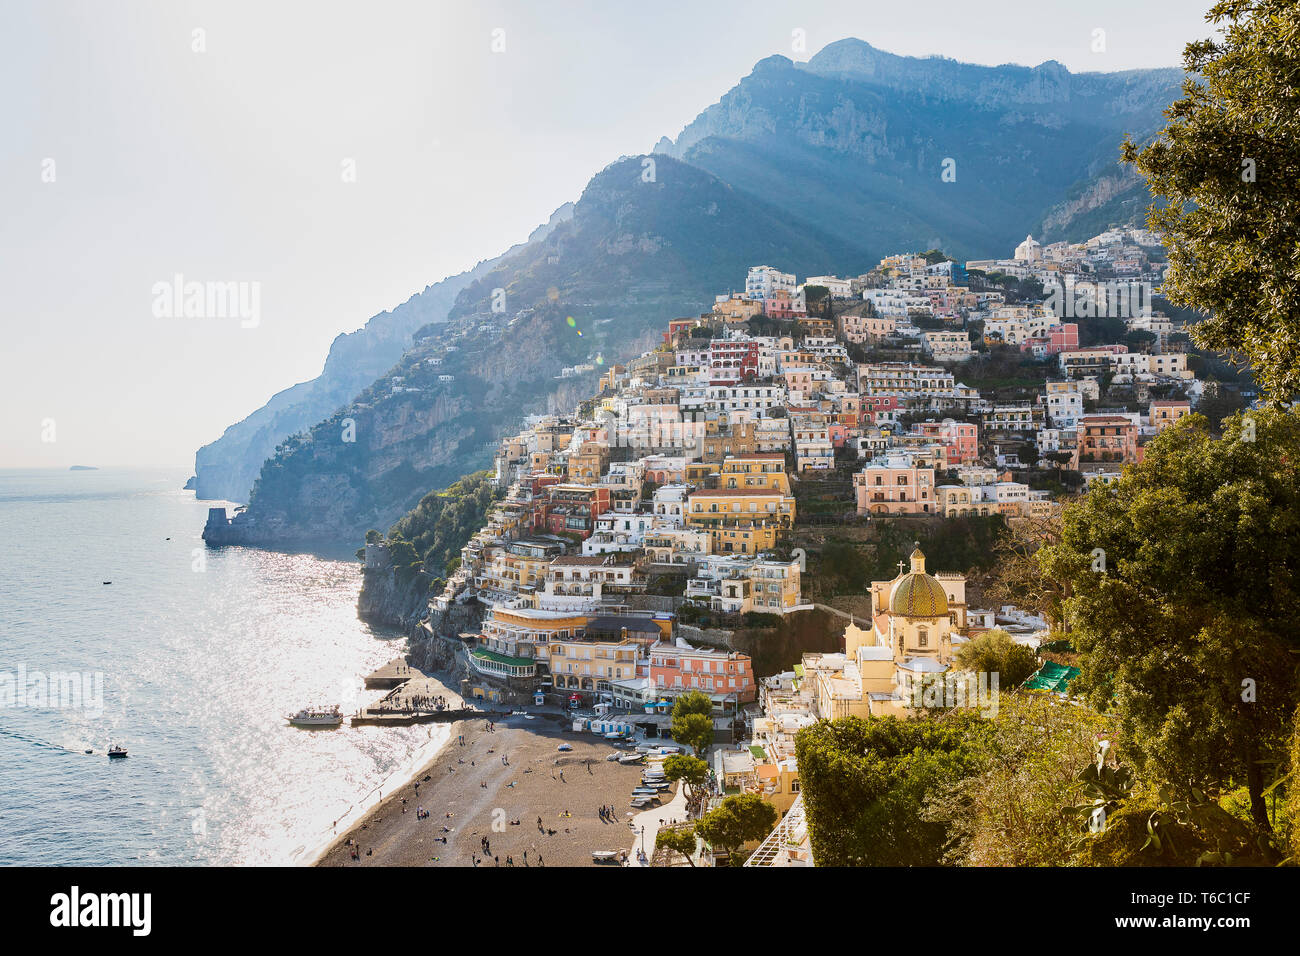 The Town of Positano, Italy Stock Photo